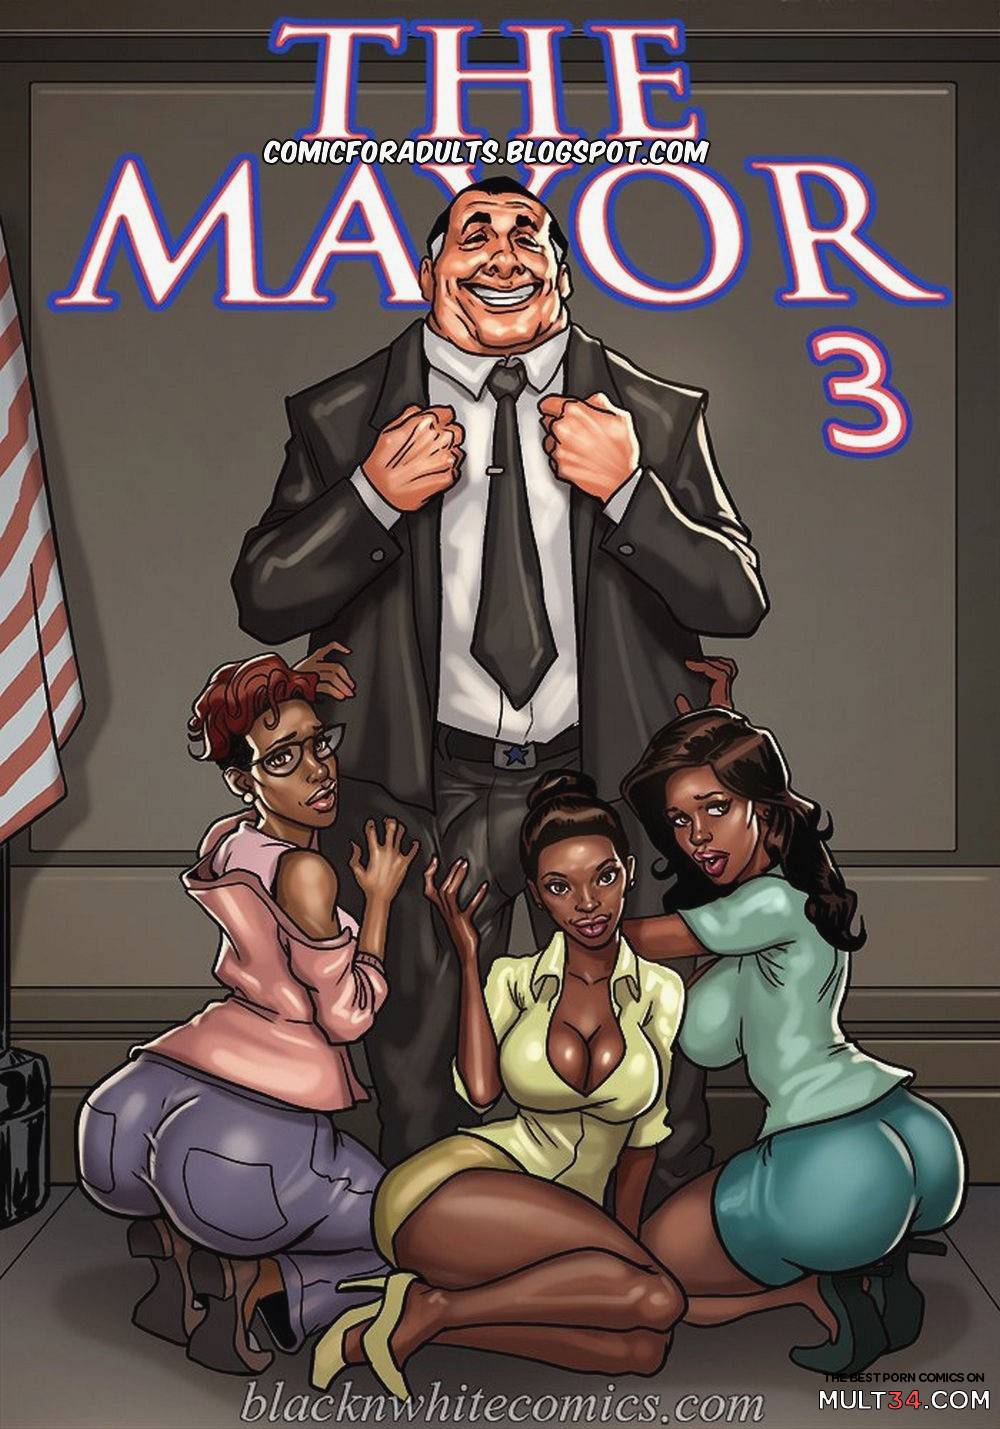 Porn comics the mayor 3